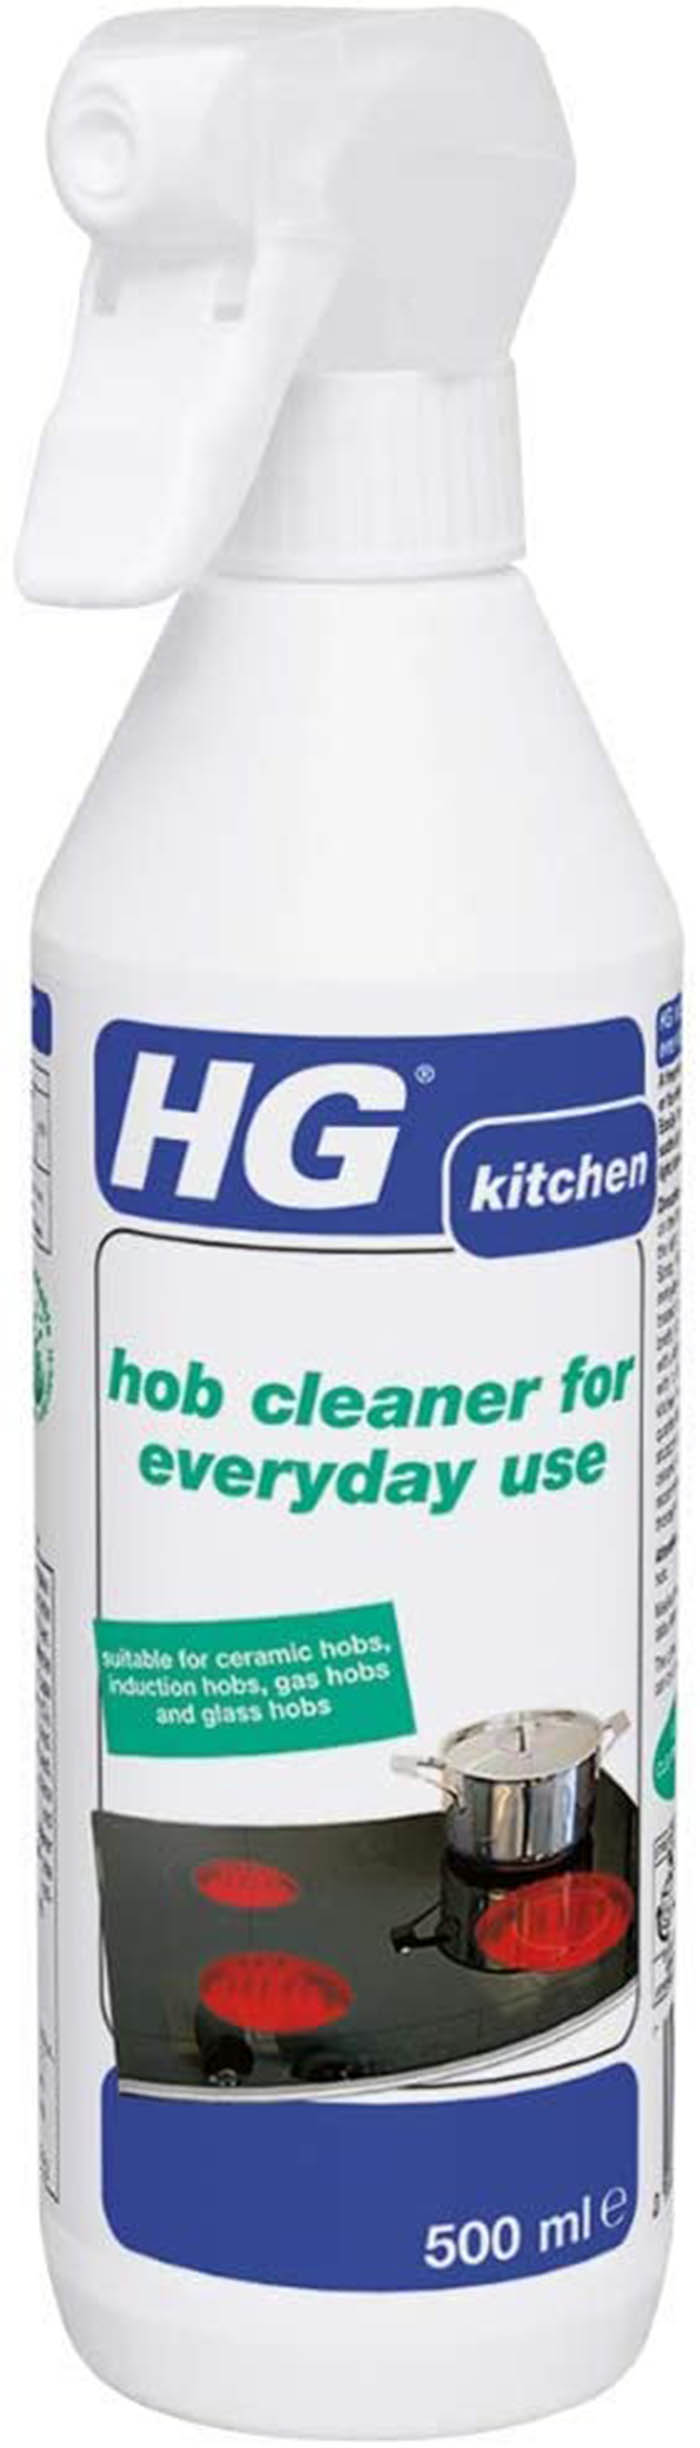 HG CERAMIC HOB CLEANER EVERYDAY USE 500ML